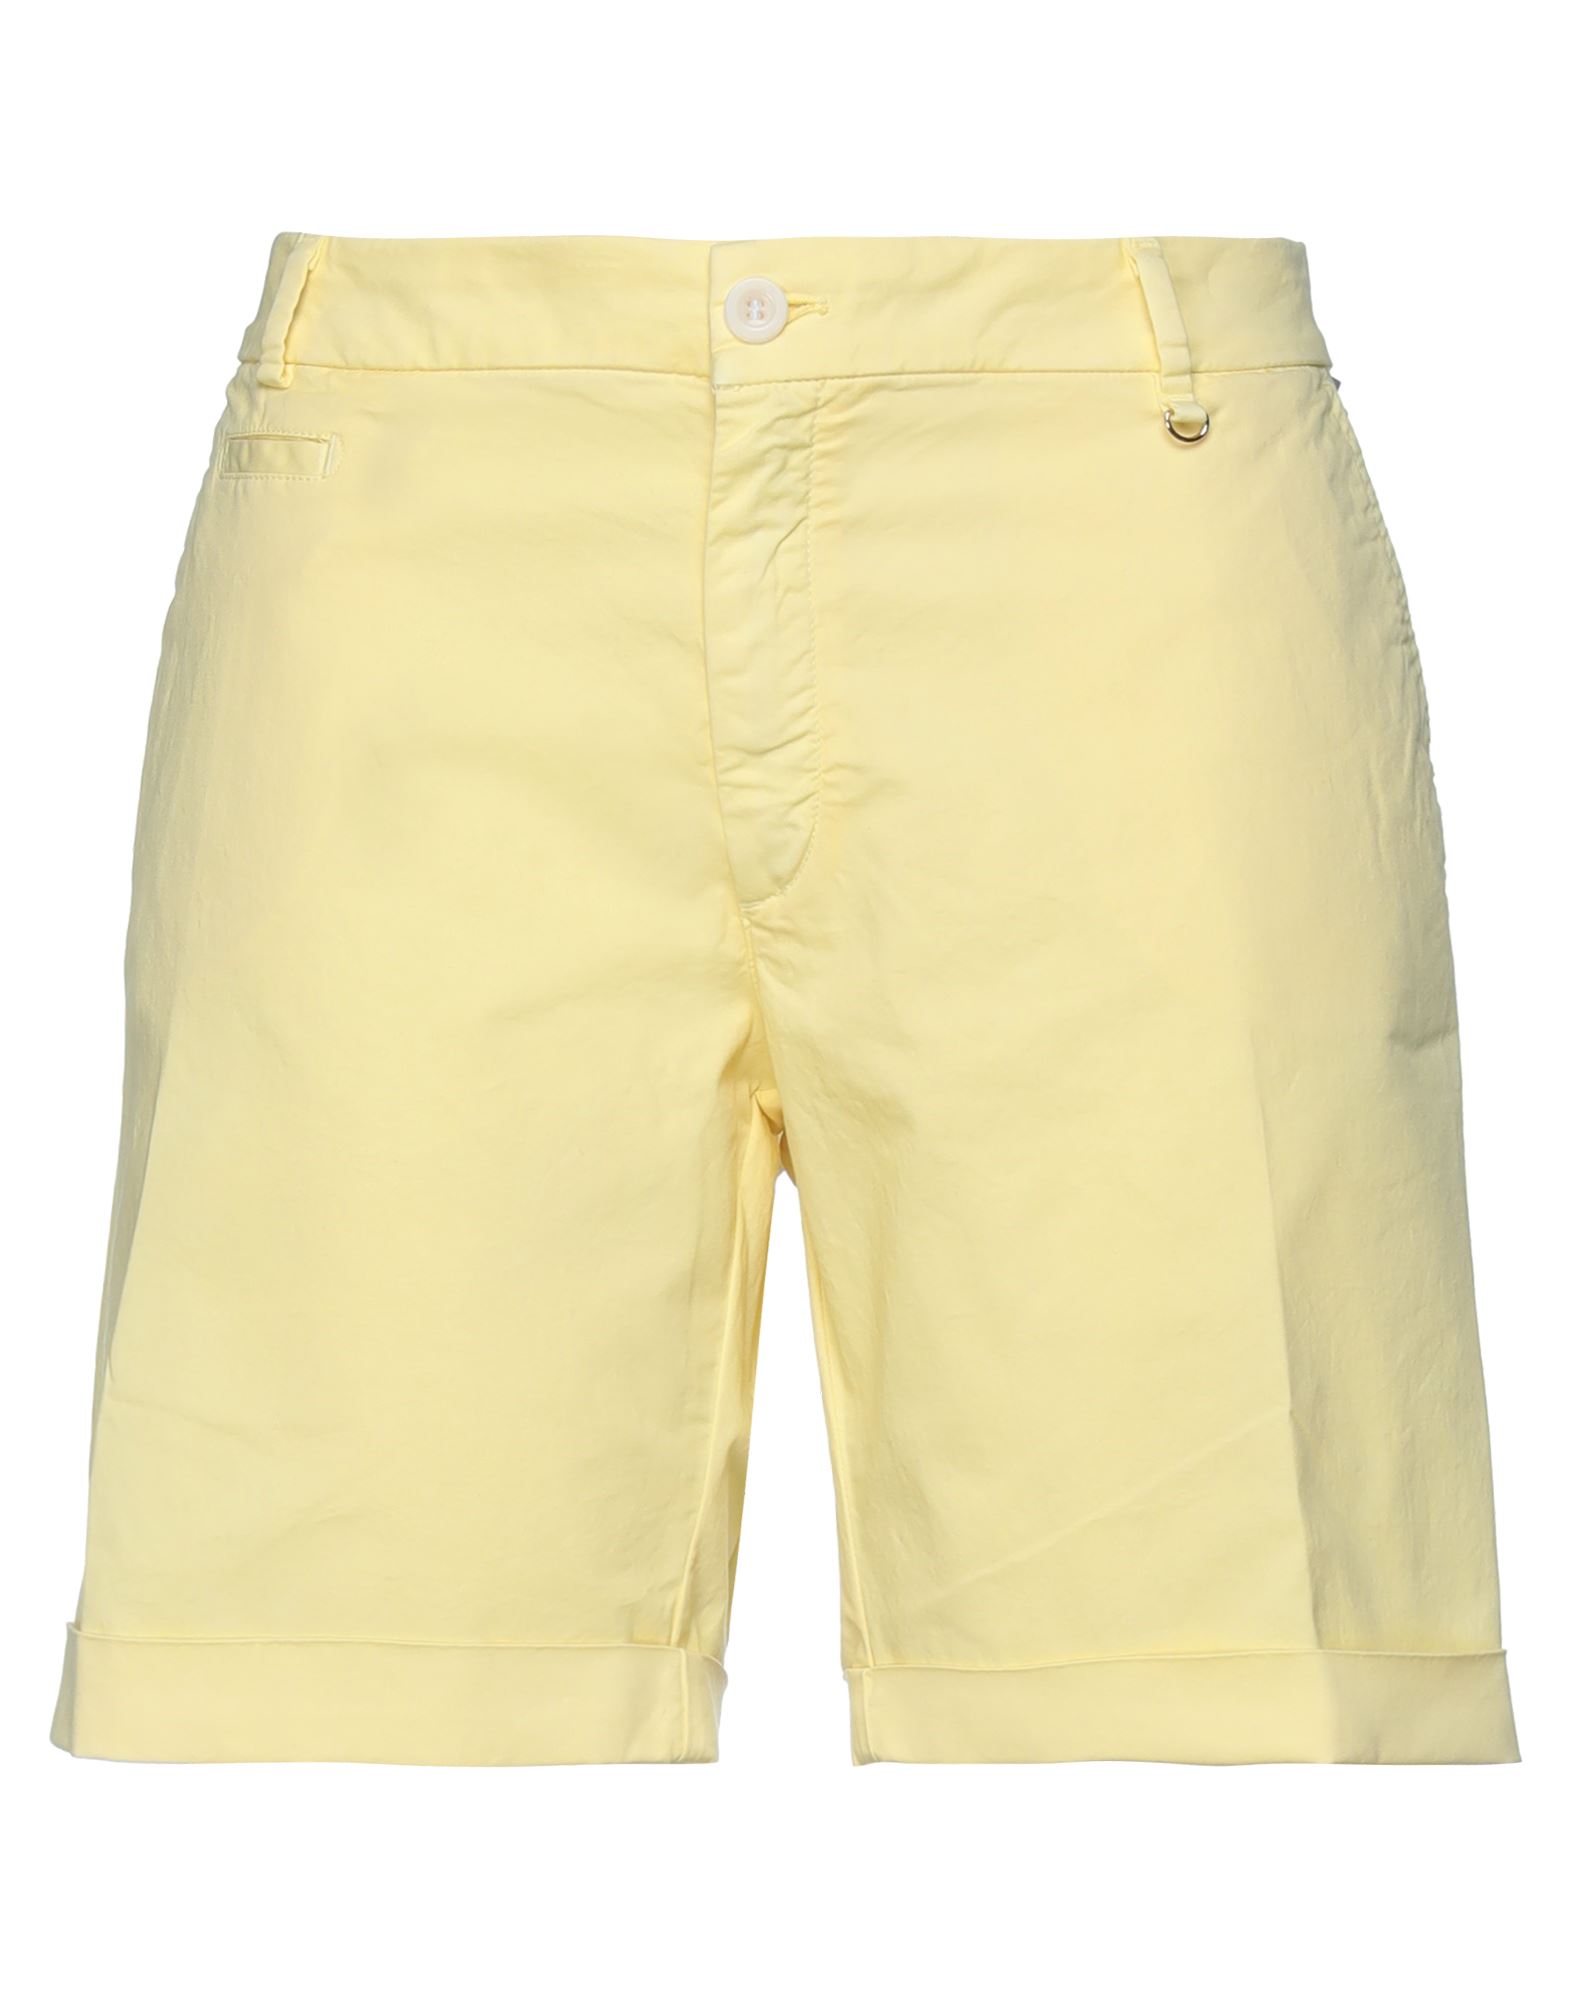 MASON'S Shorts & Bermuda Shorts | Smart Closet